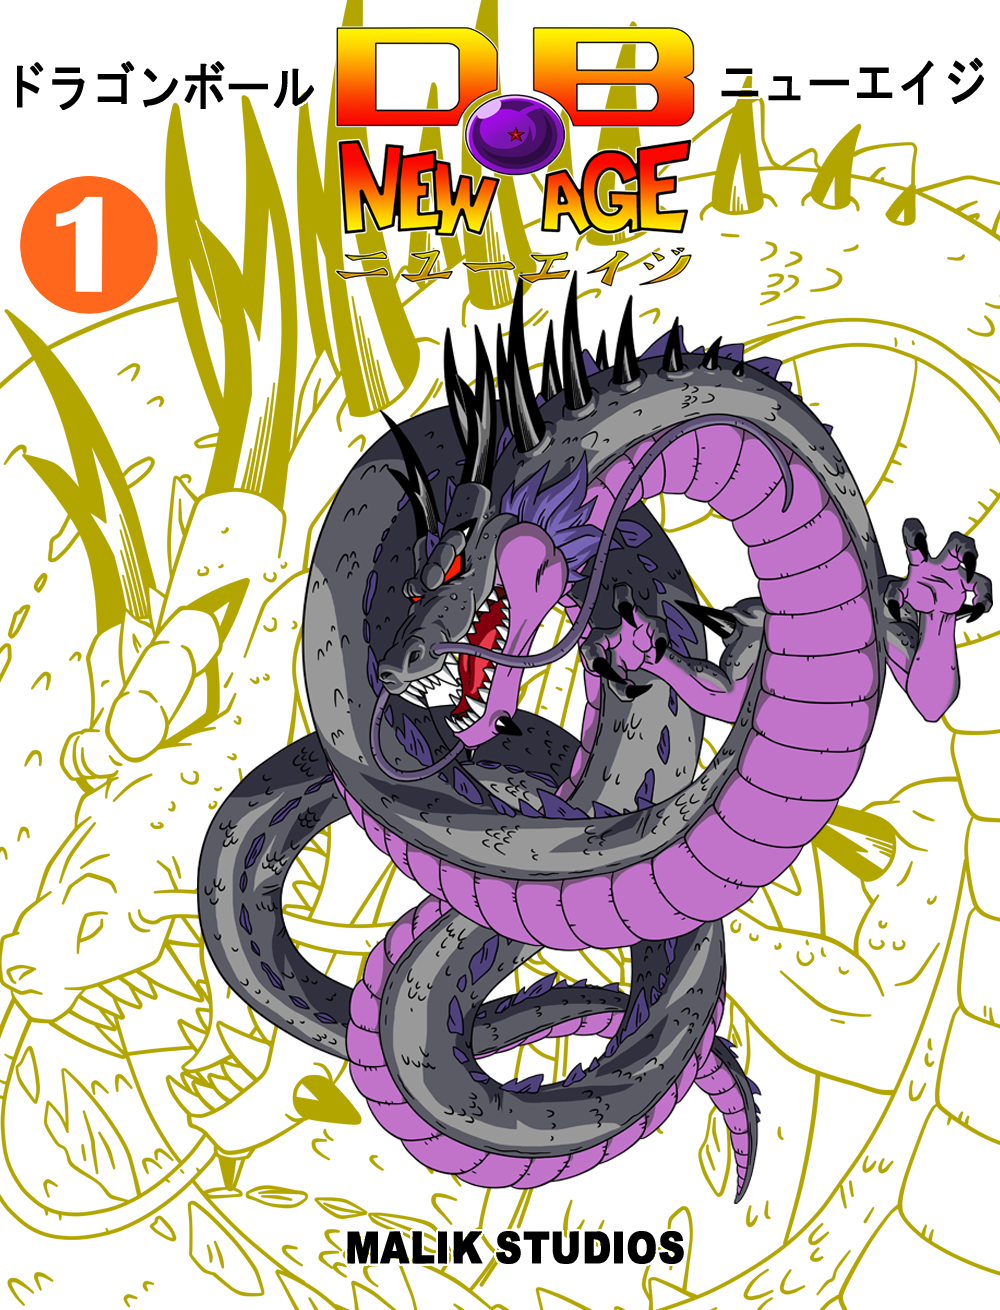 Fanmanga - Dragon Ball New Age • Kanzenshuu